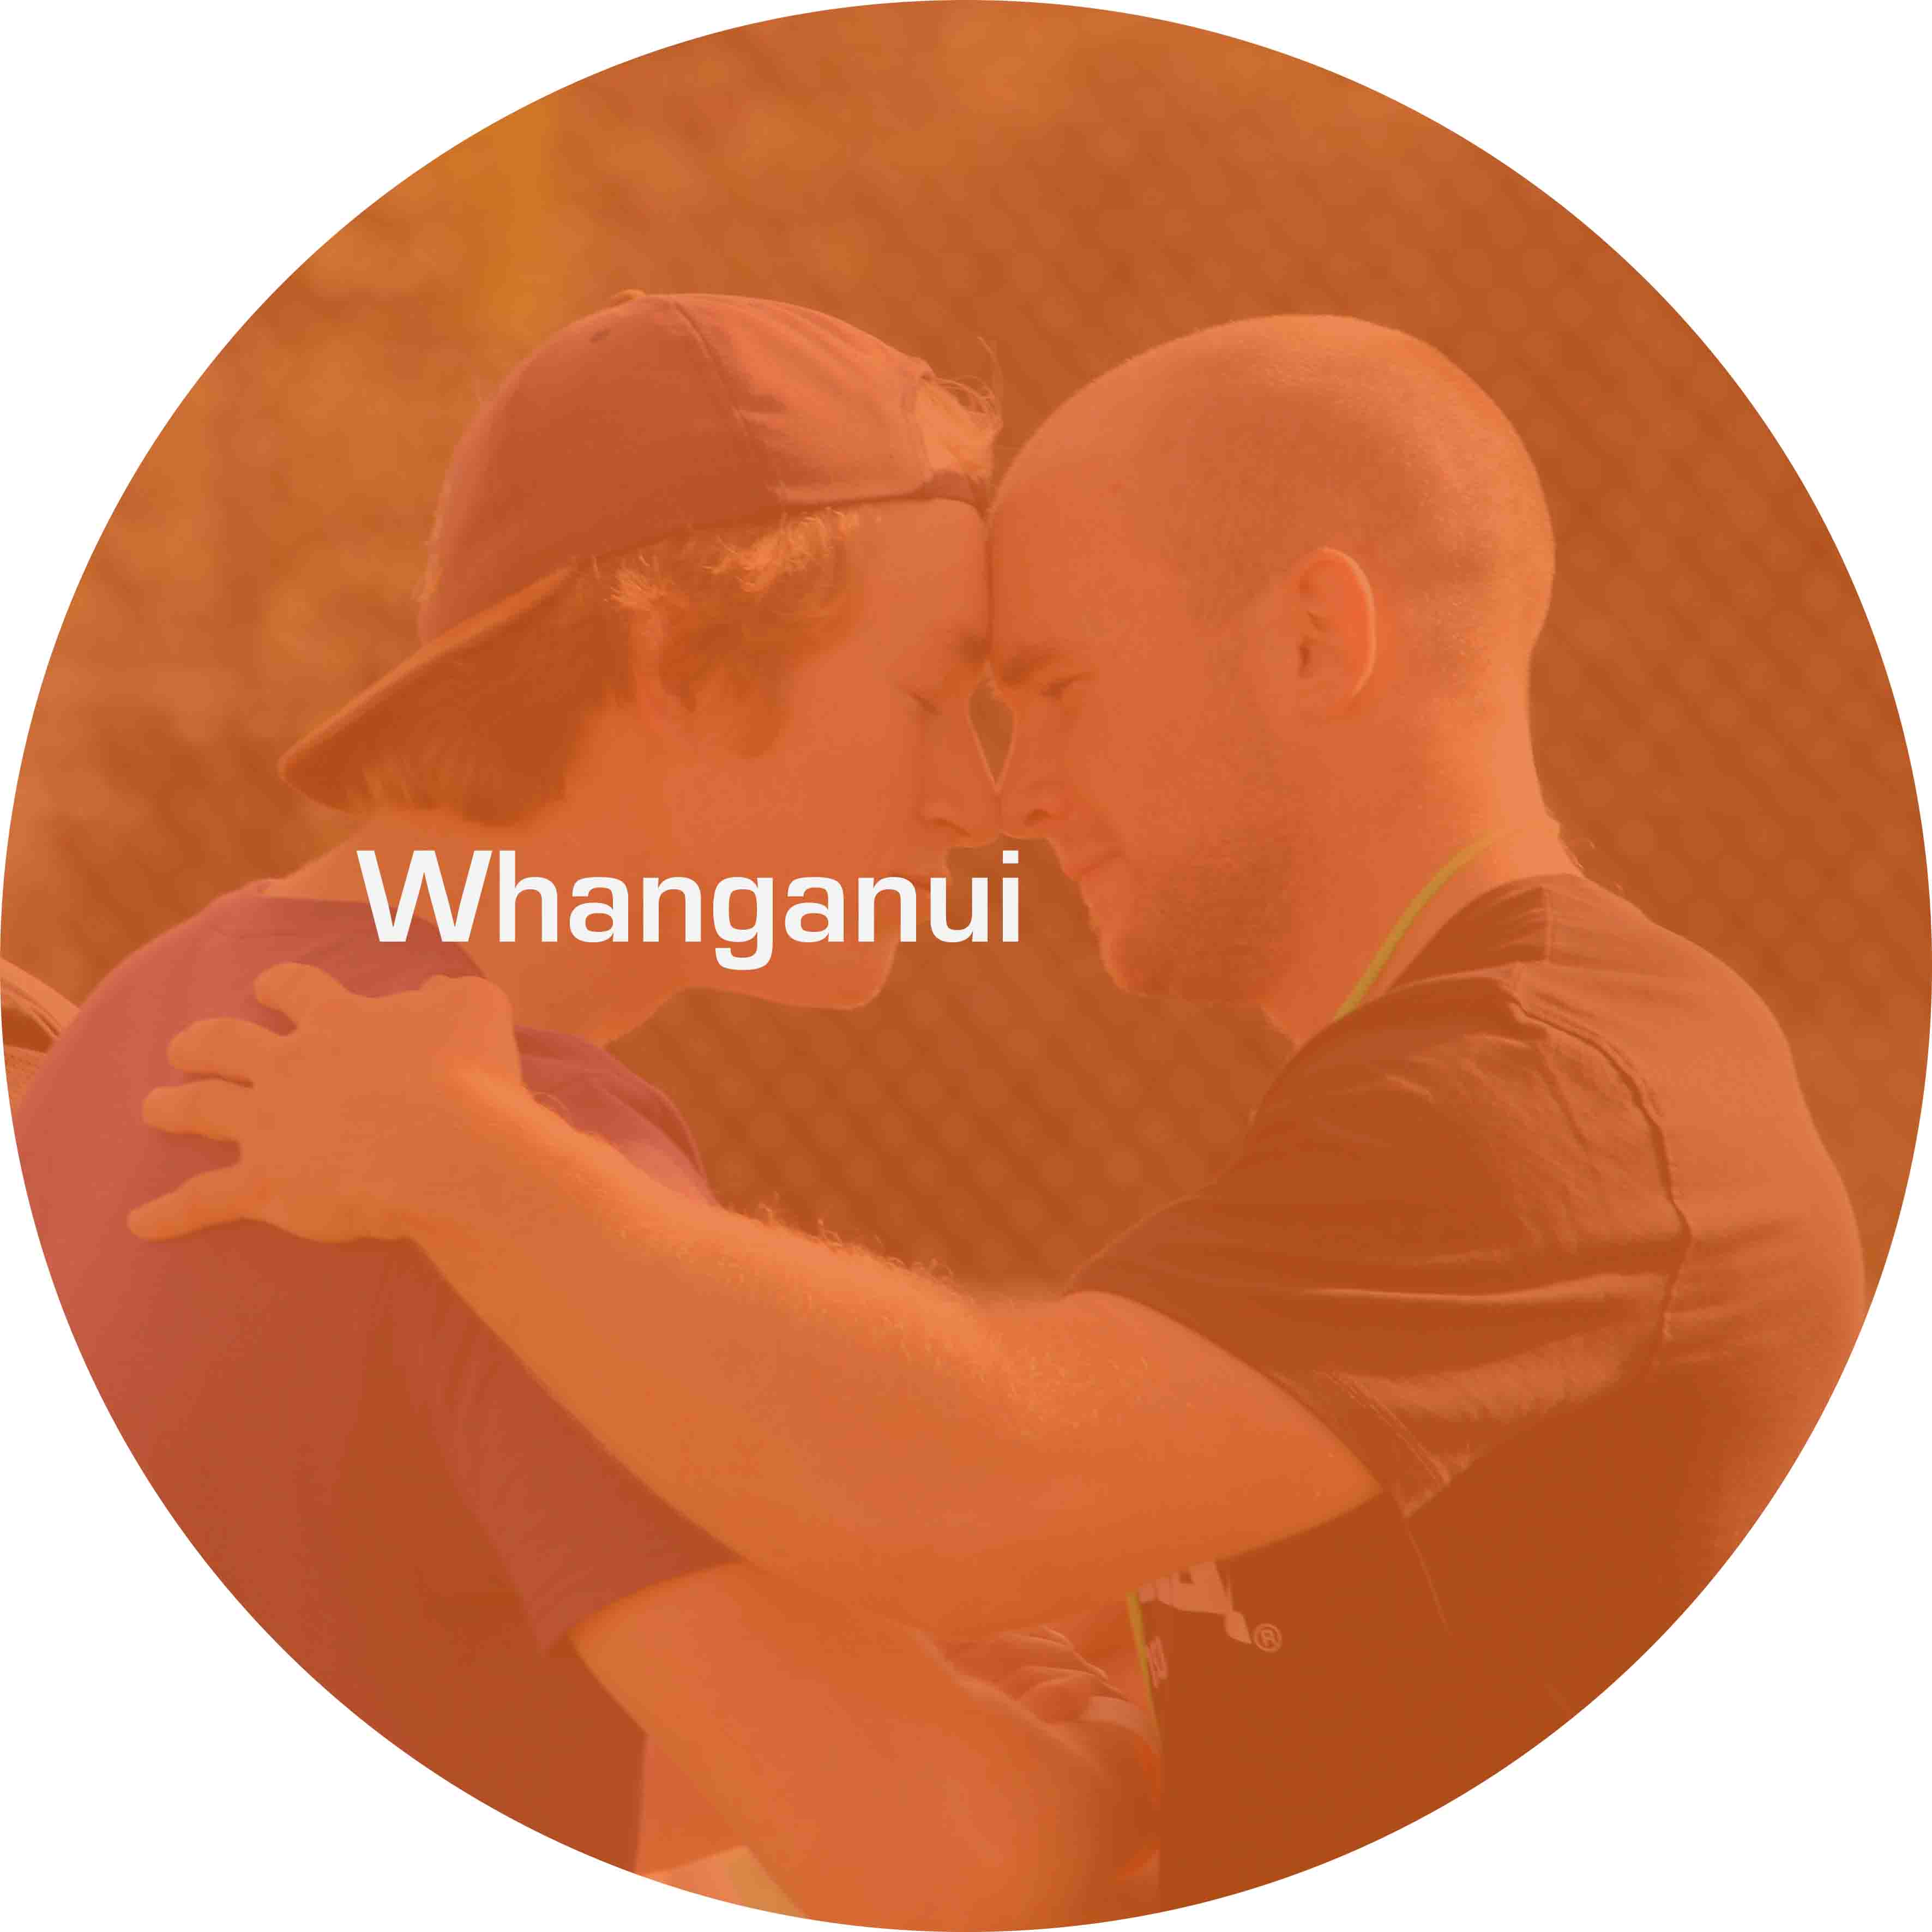 redirection to TOH Whanganui webpage